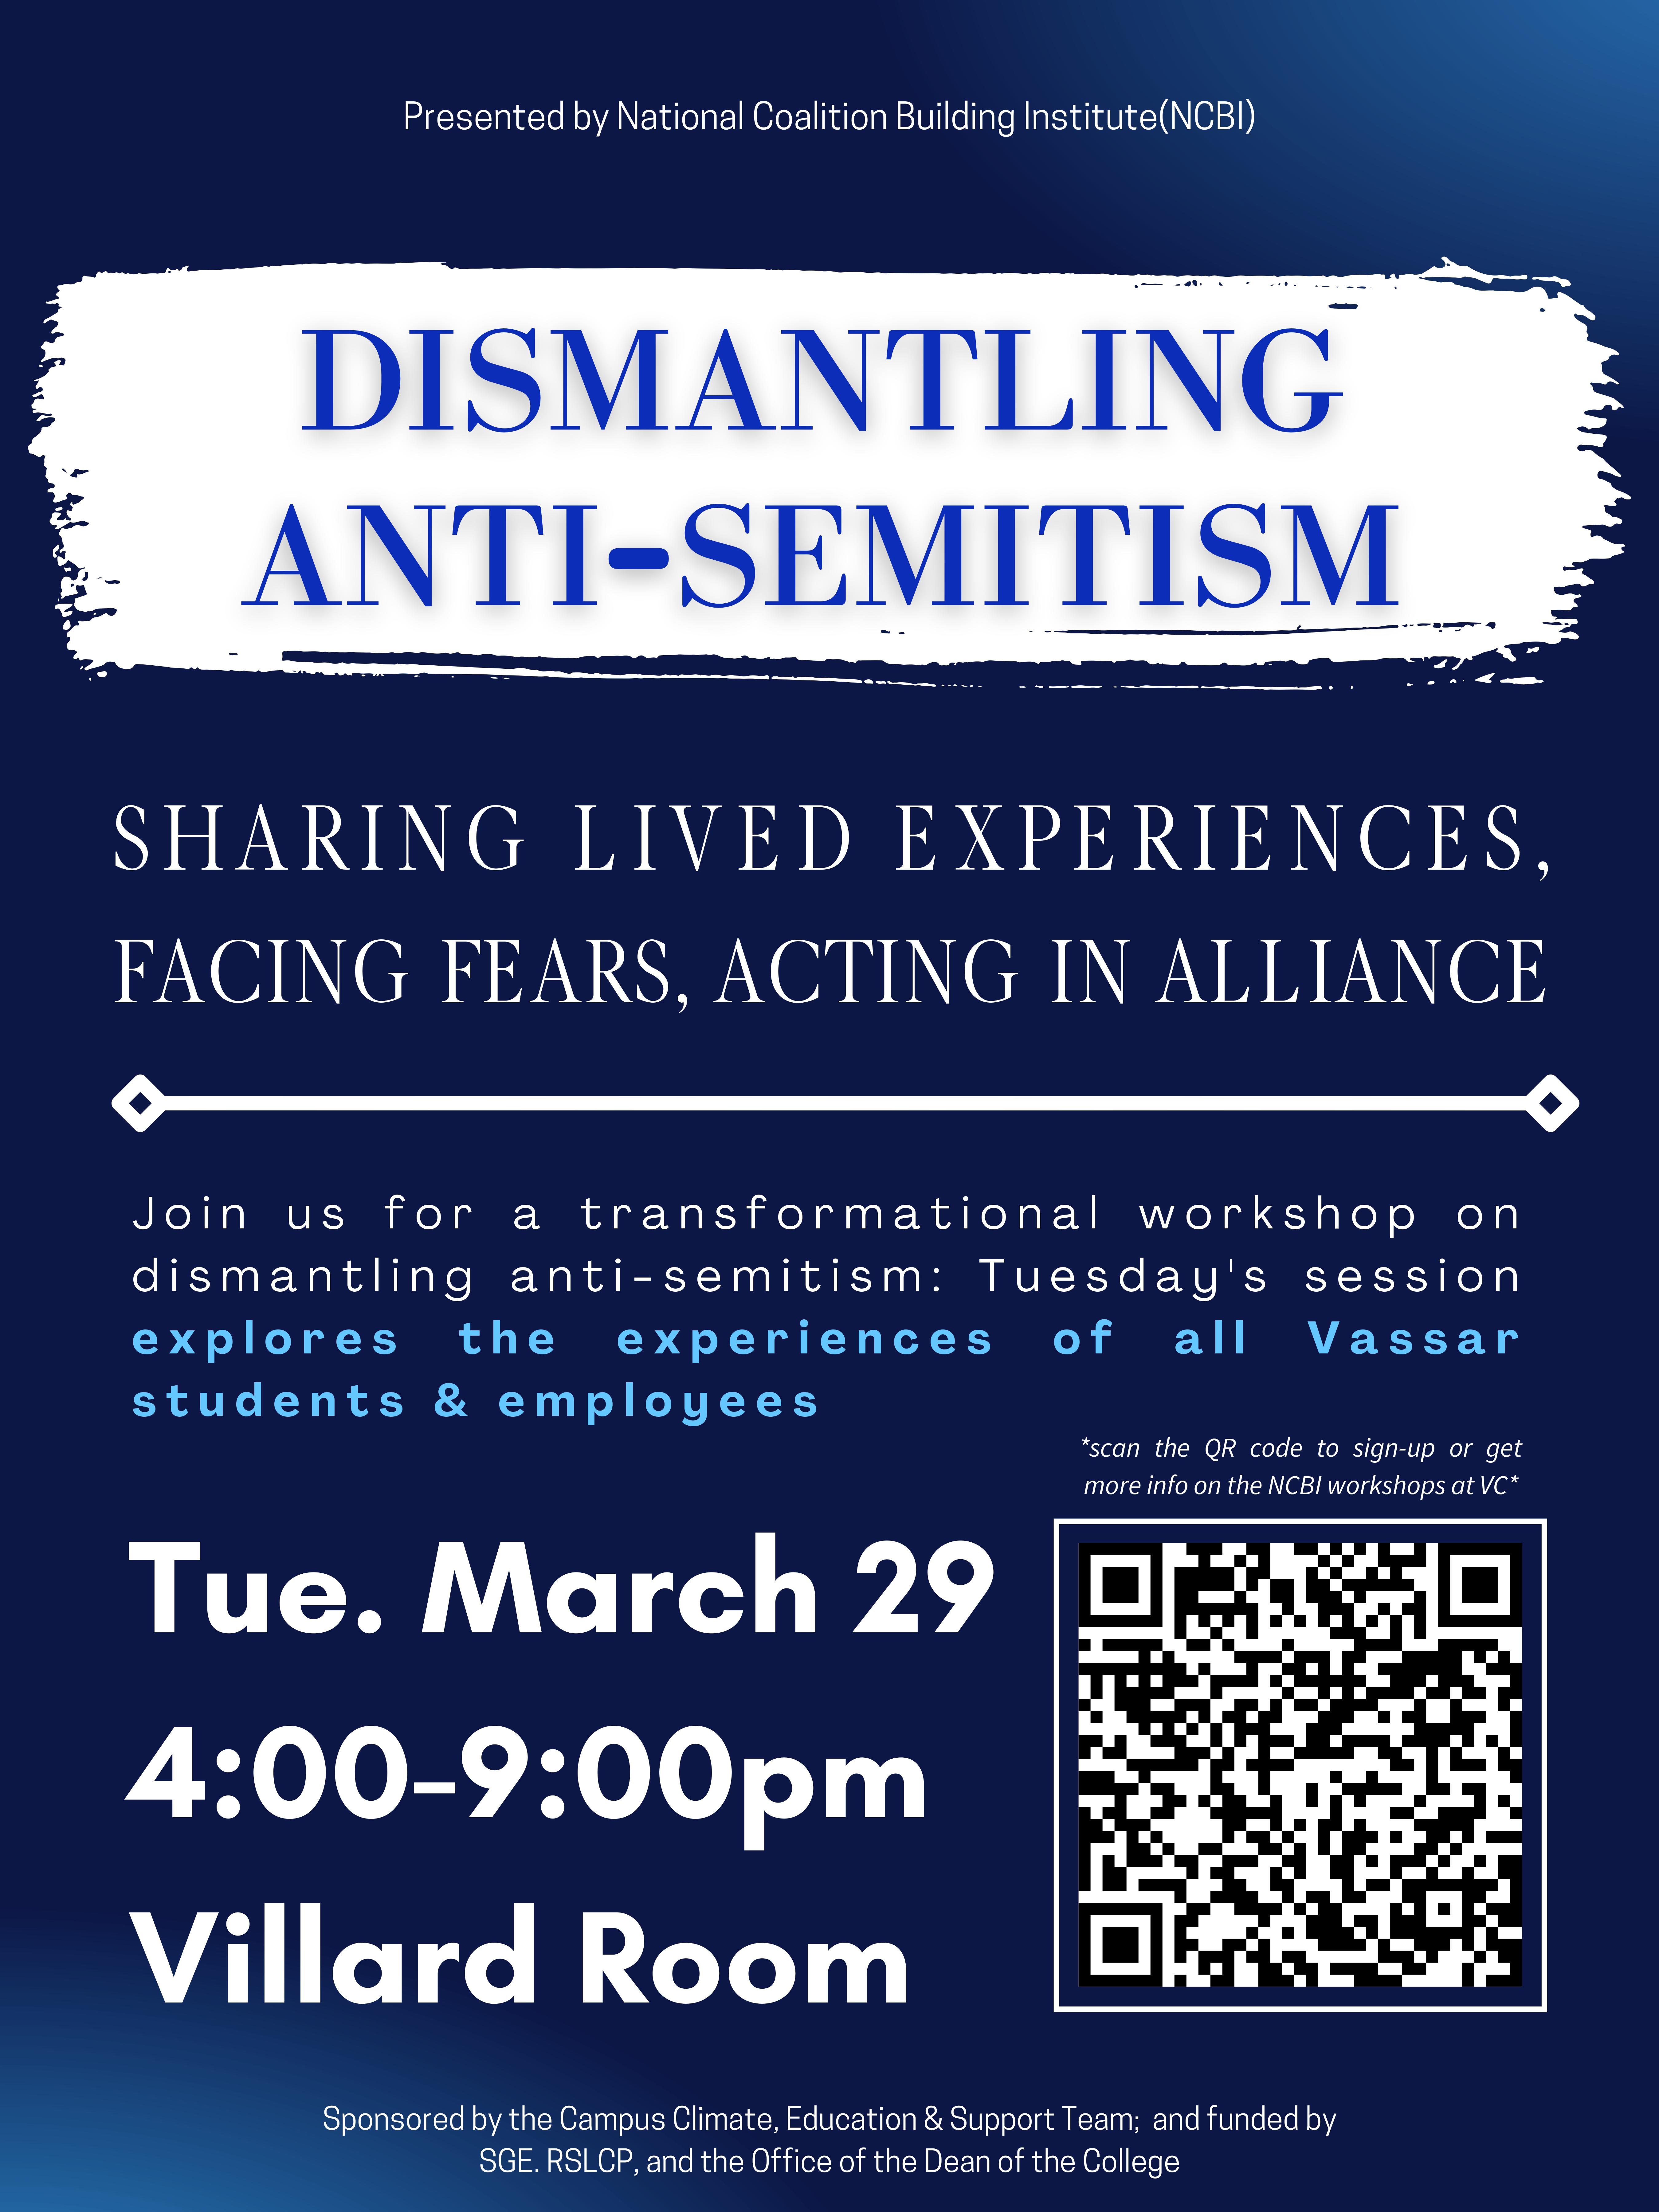 Anti-Semitism workshop poster including QR code for registering.